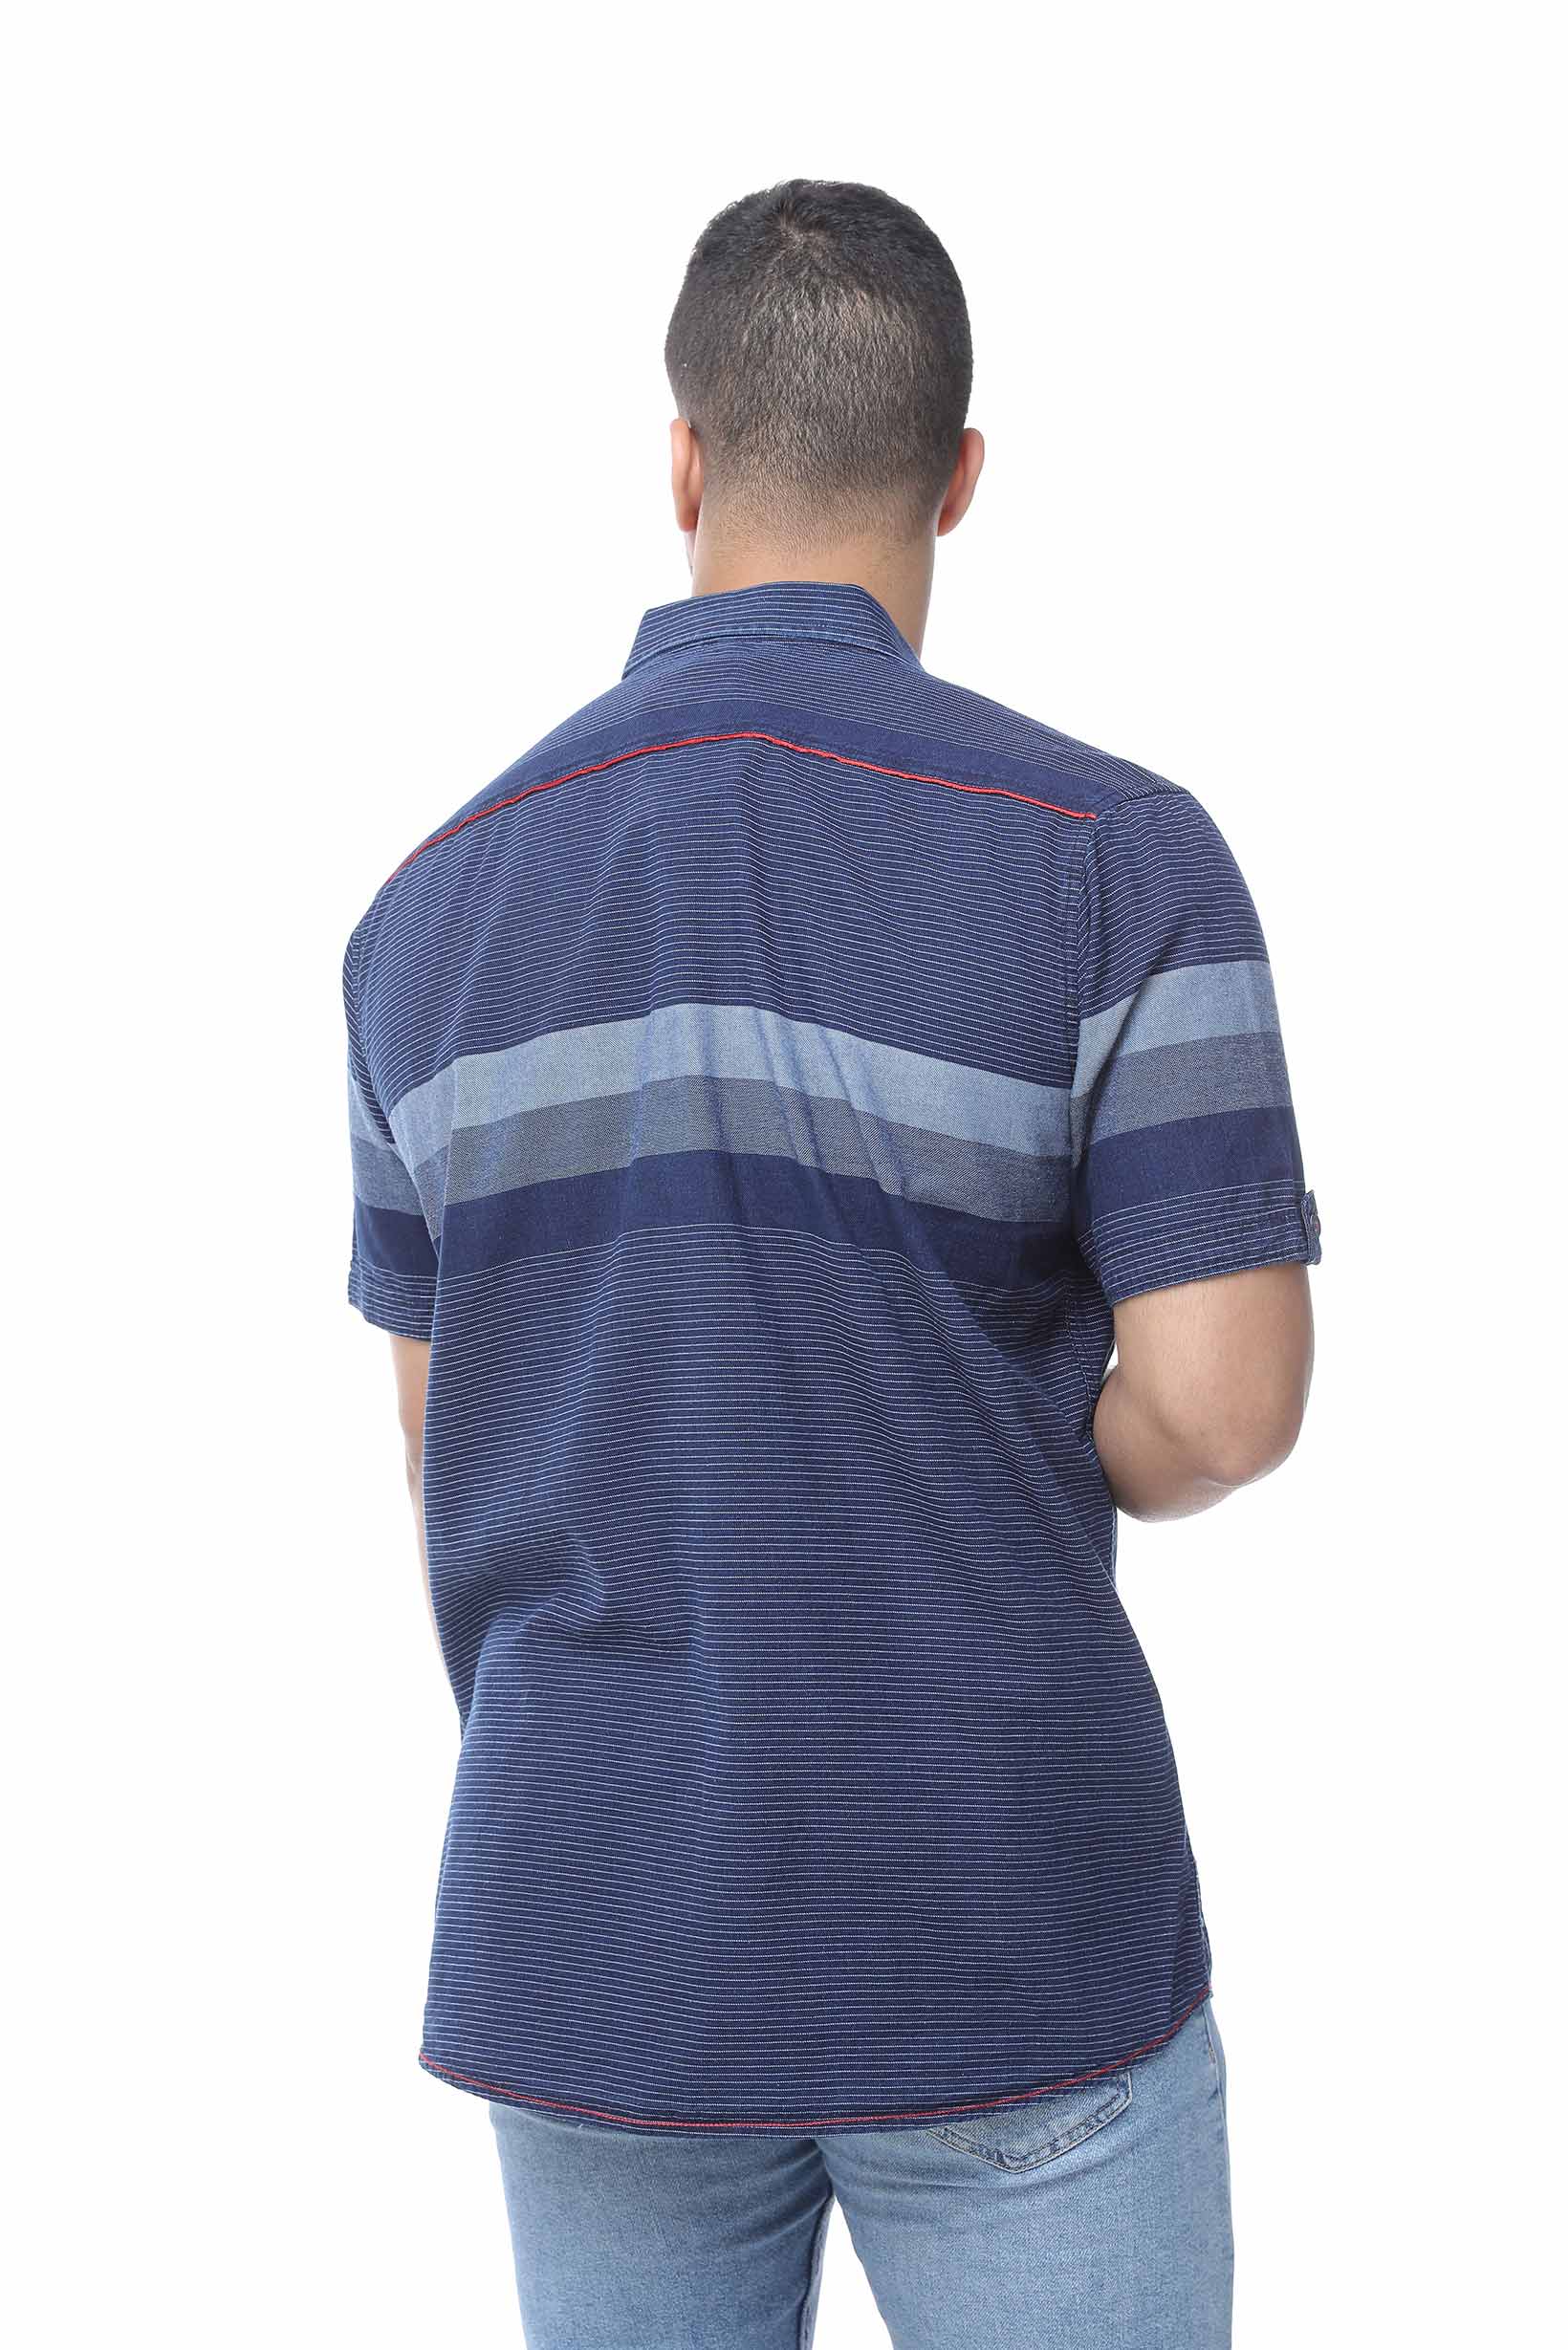 Pocket mens sleeve sleeve shirts BLUE